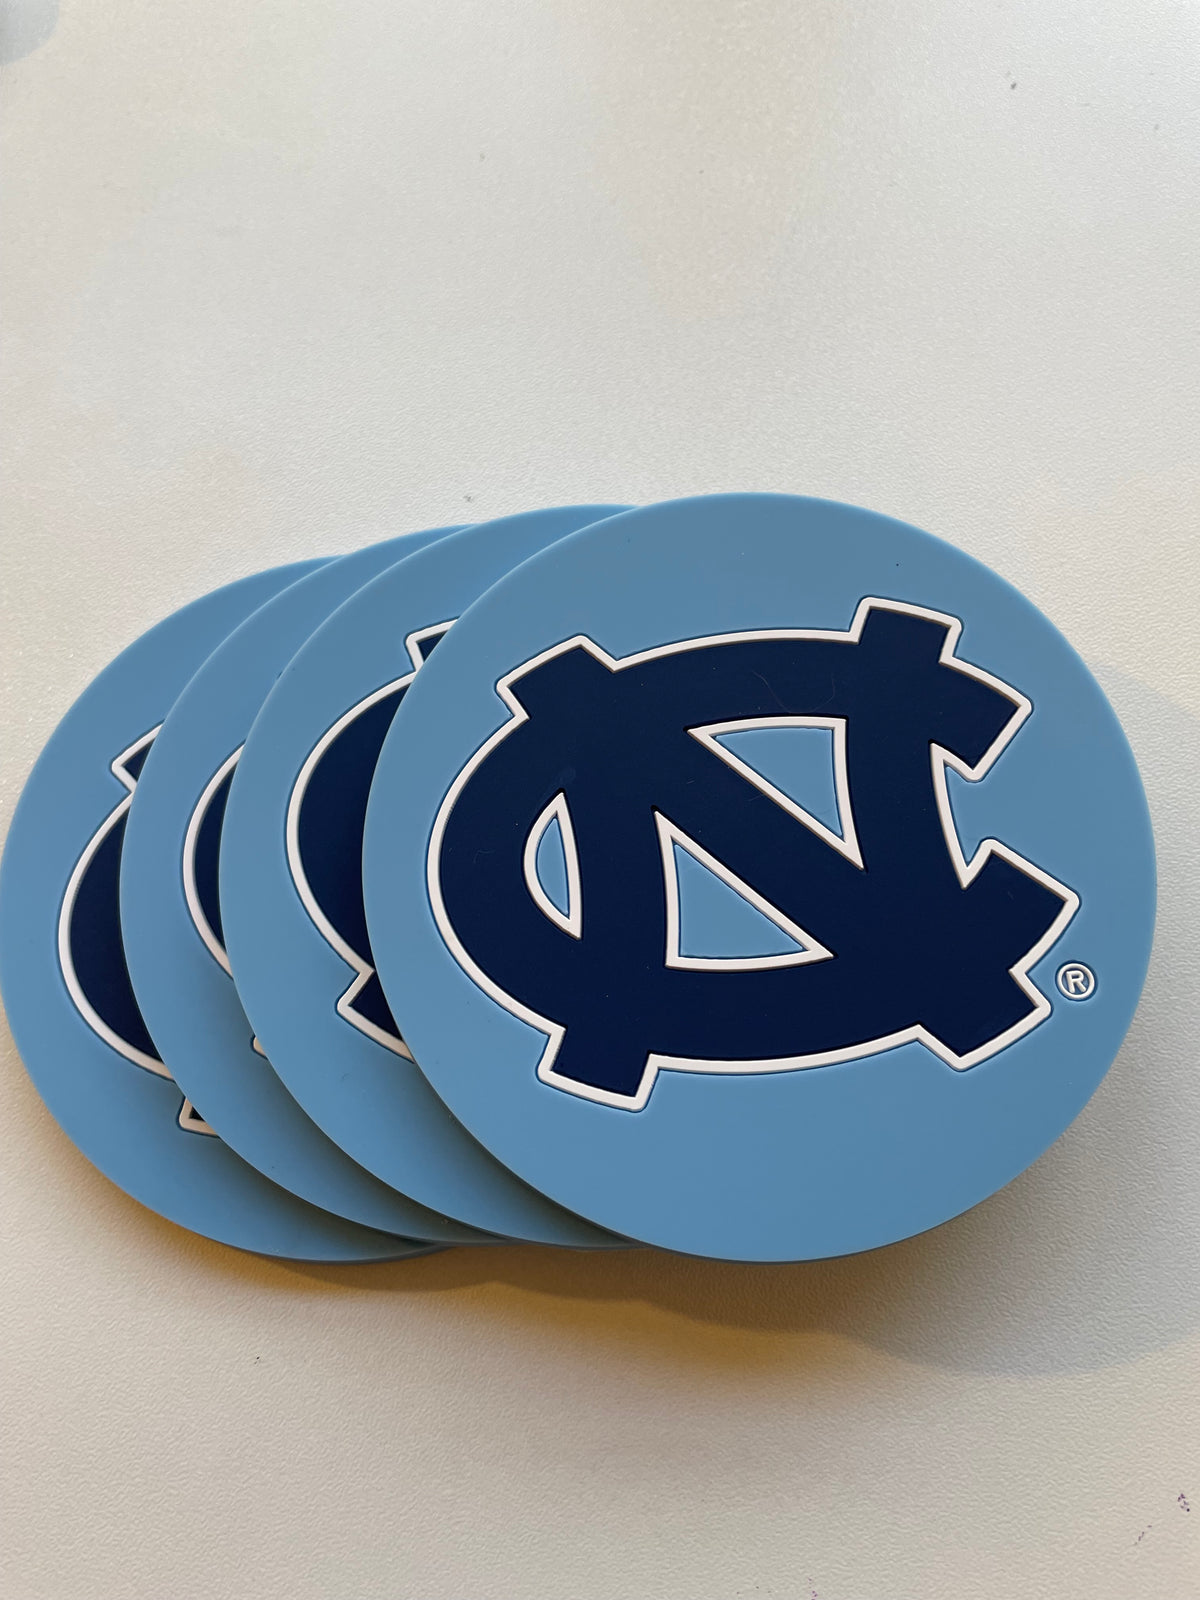 North Carolina Tar Heels (UNC) 4-Pack PVC Coasters